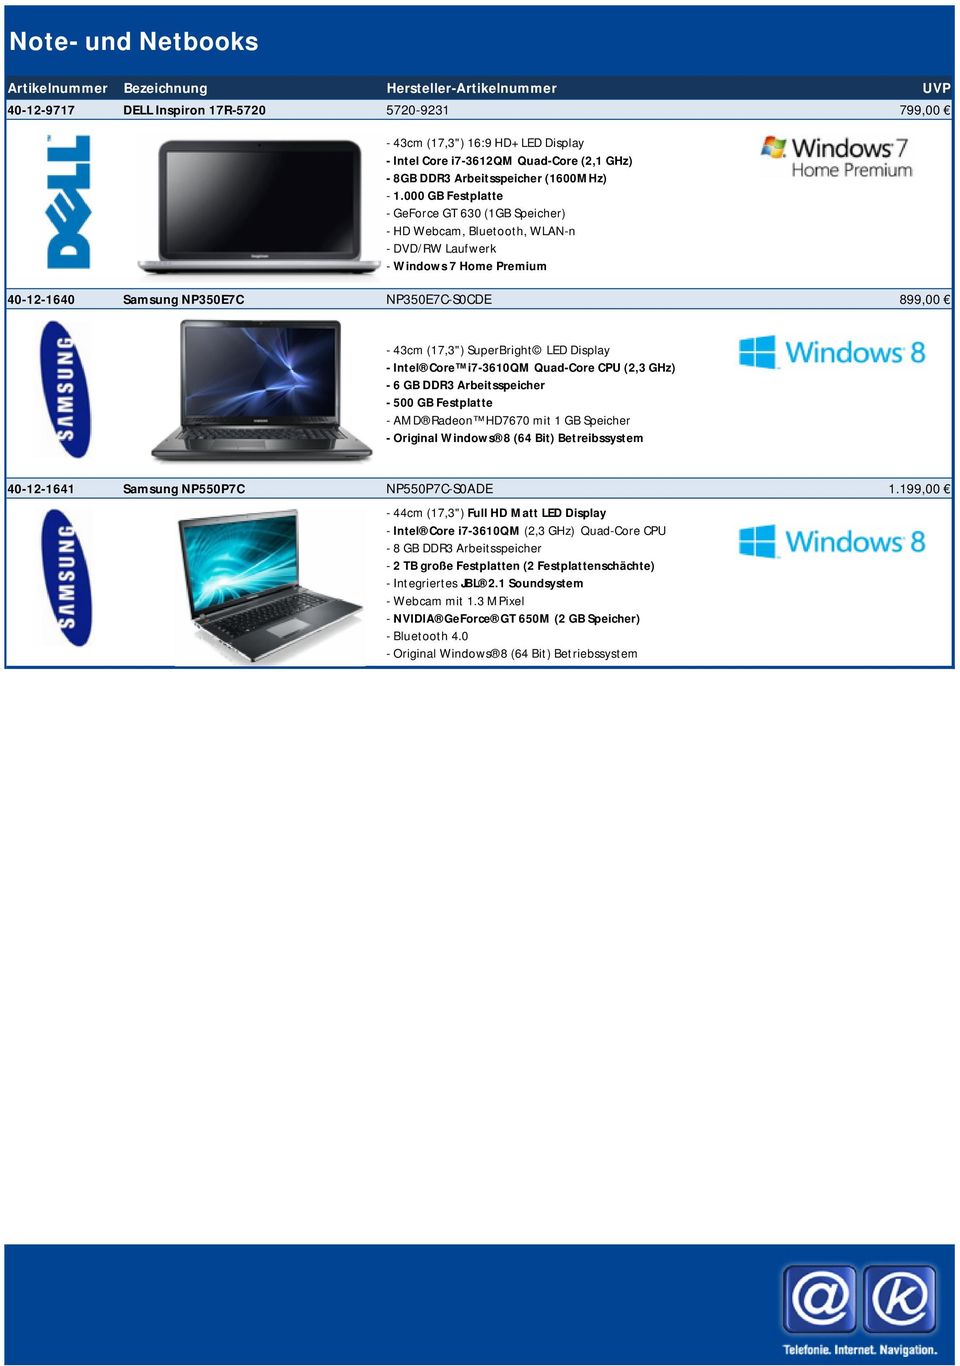 000 GB Festplatte - GeForce GT 630 (1GB Speicher) - HD Webcam, Bluetooth, WLAN-n - DVD/RW Laufwerk - Windows 7 Home Premium 40-12-1640 Samsung NP350E7C NP350E7C-S0CDE 899,00-43cm (17,3") SuperBright